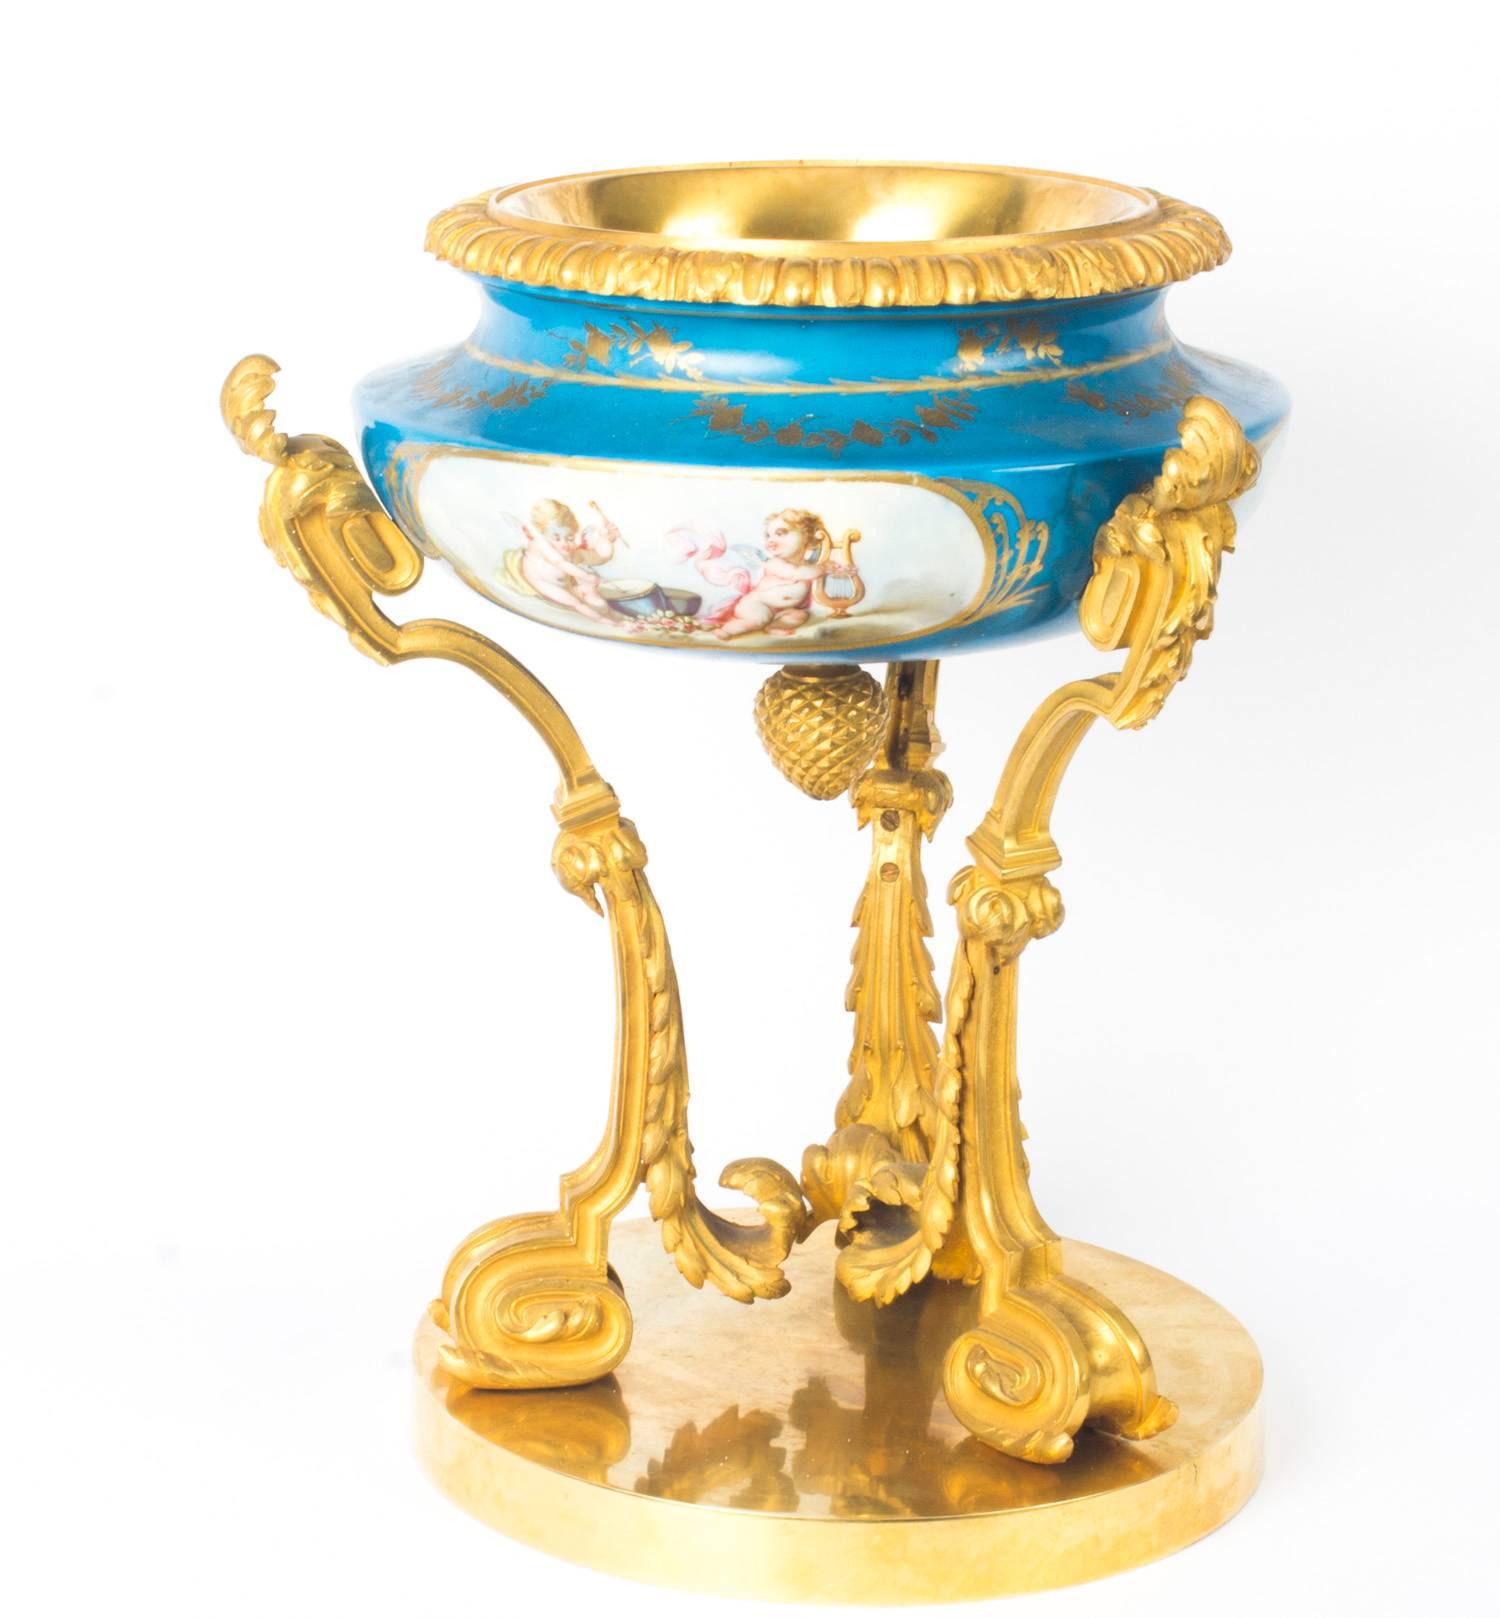 Neoclassical Antique Gilt Bronze and Sèvres Porcelain Centrepiece, 19th Century